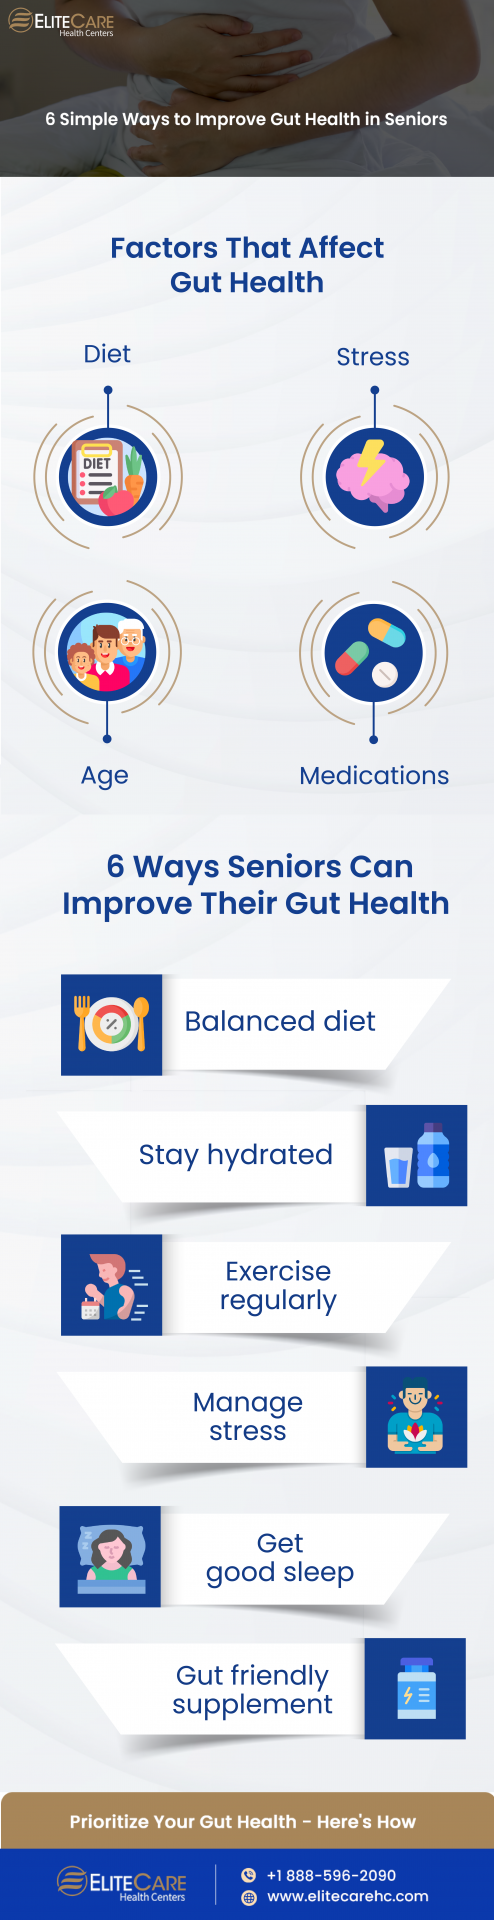 6 Ways to Improve Gut Health in Seniors | Infographic